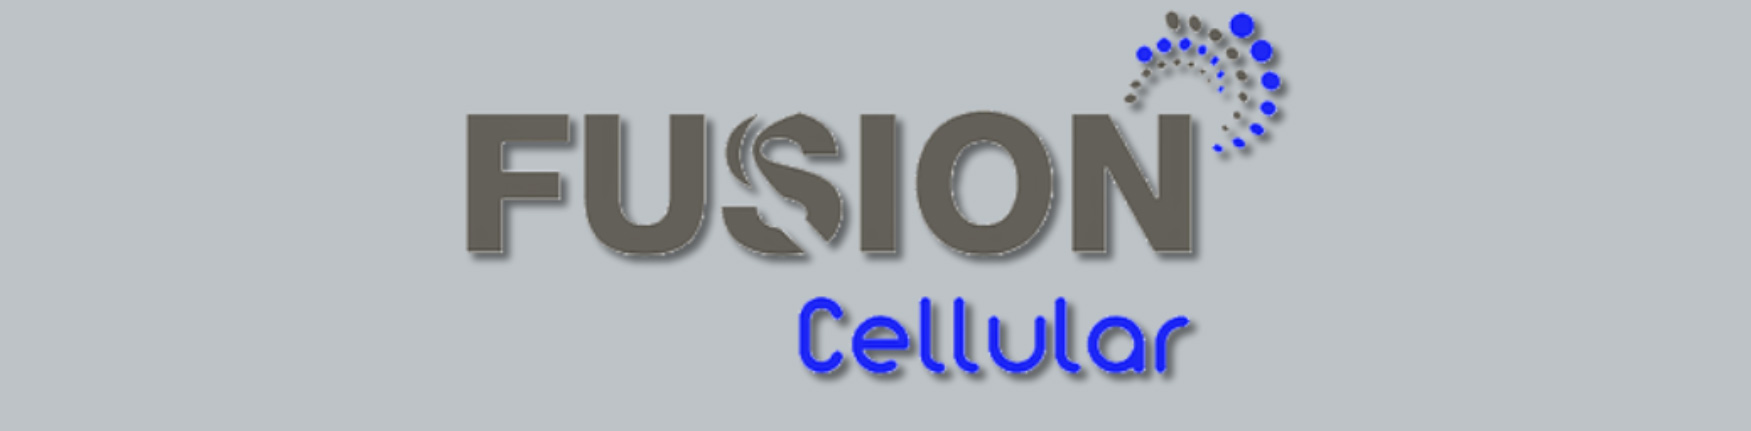 Fusion Cellular